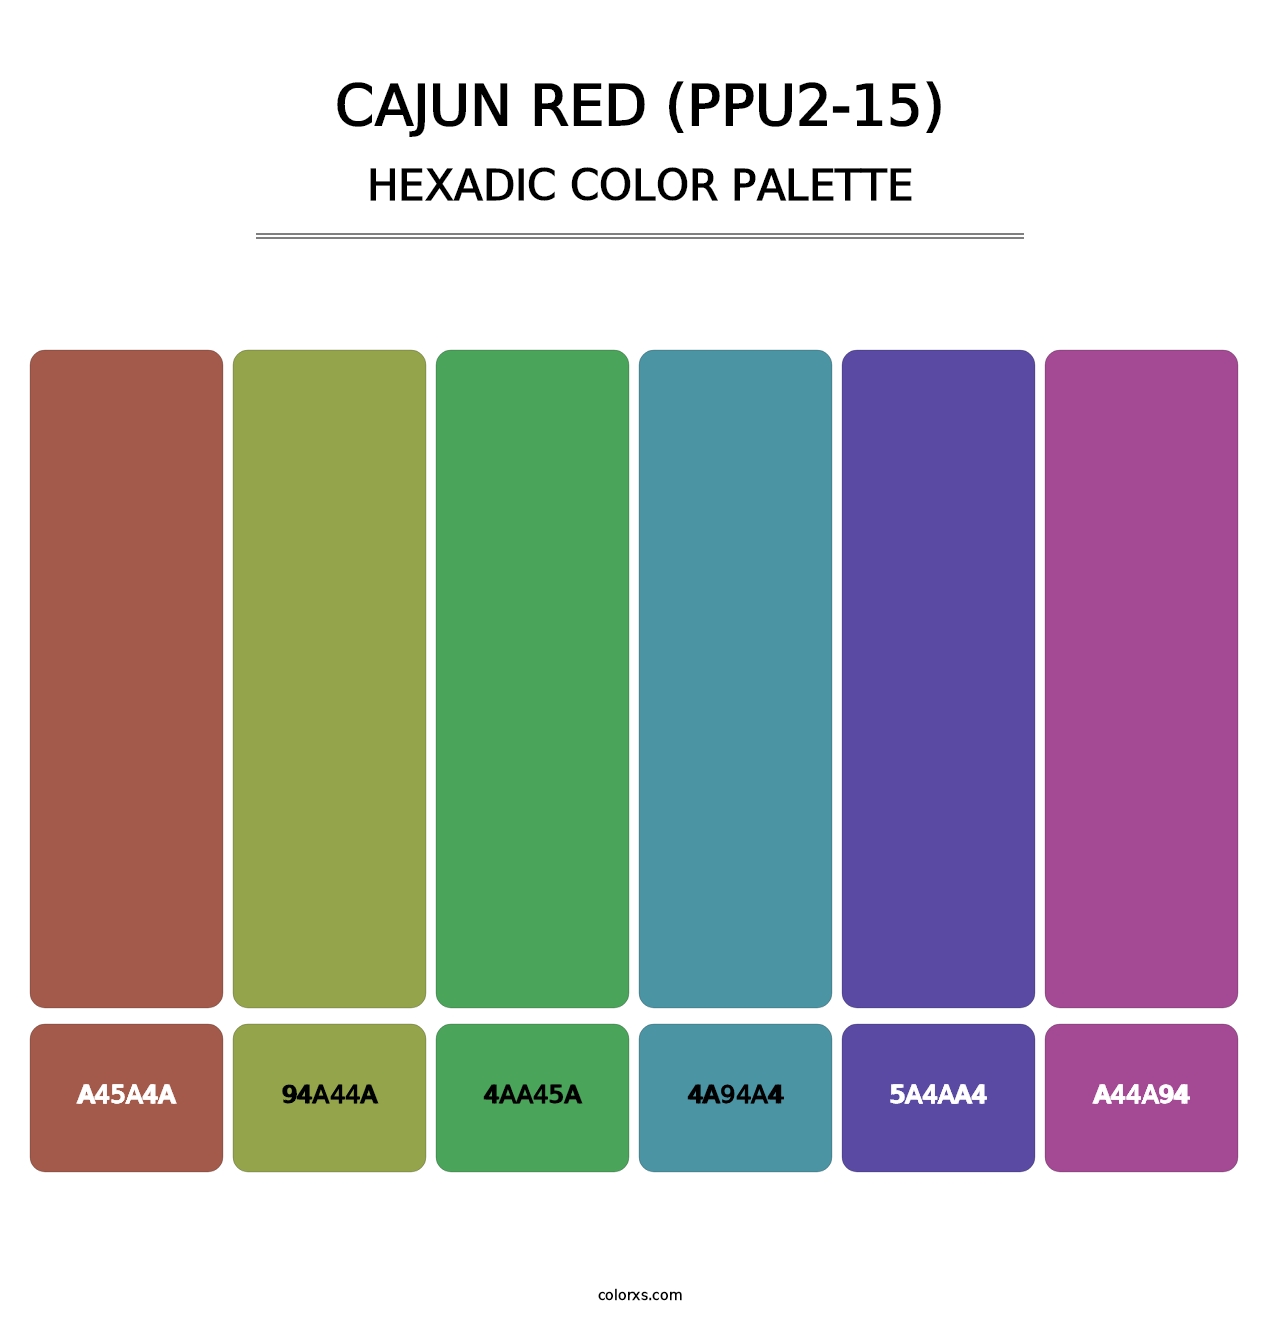 Cajun Red (PPU2-15) - Hexadic Color Palette